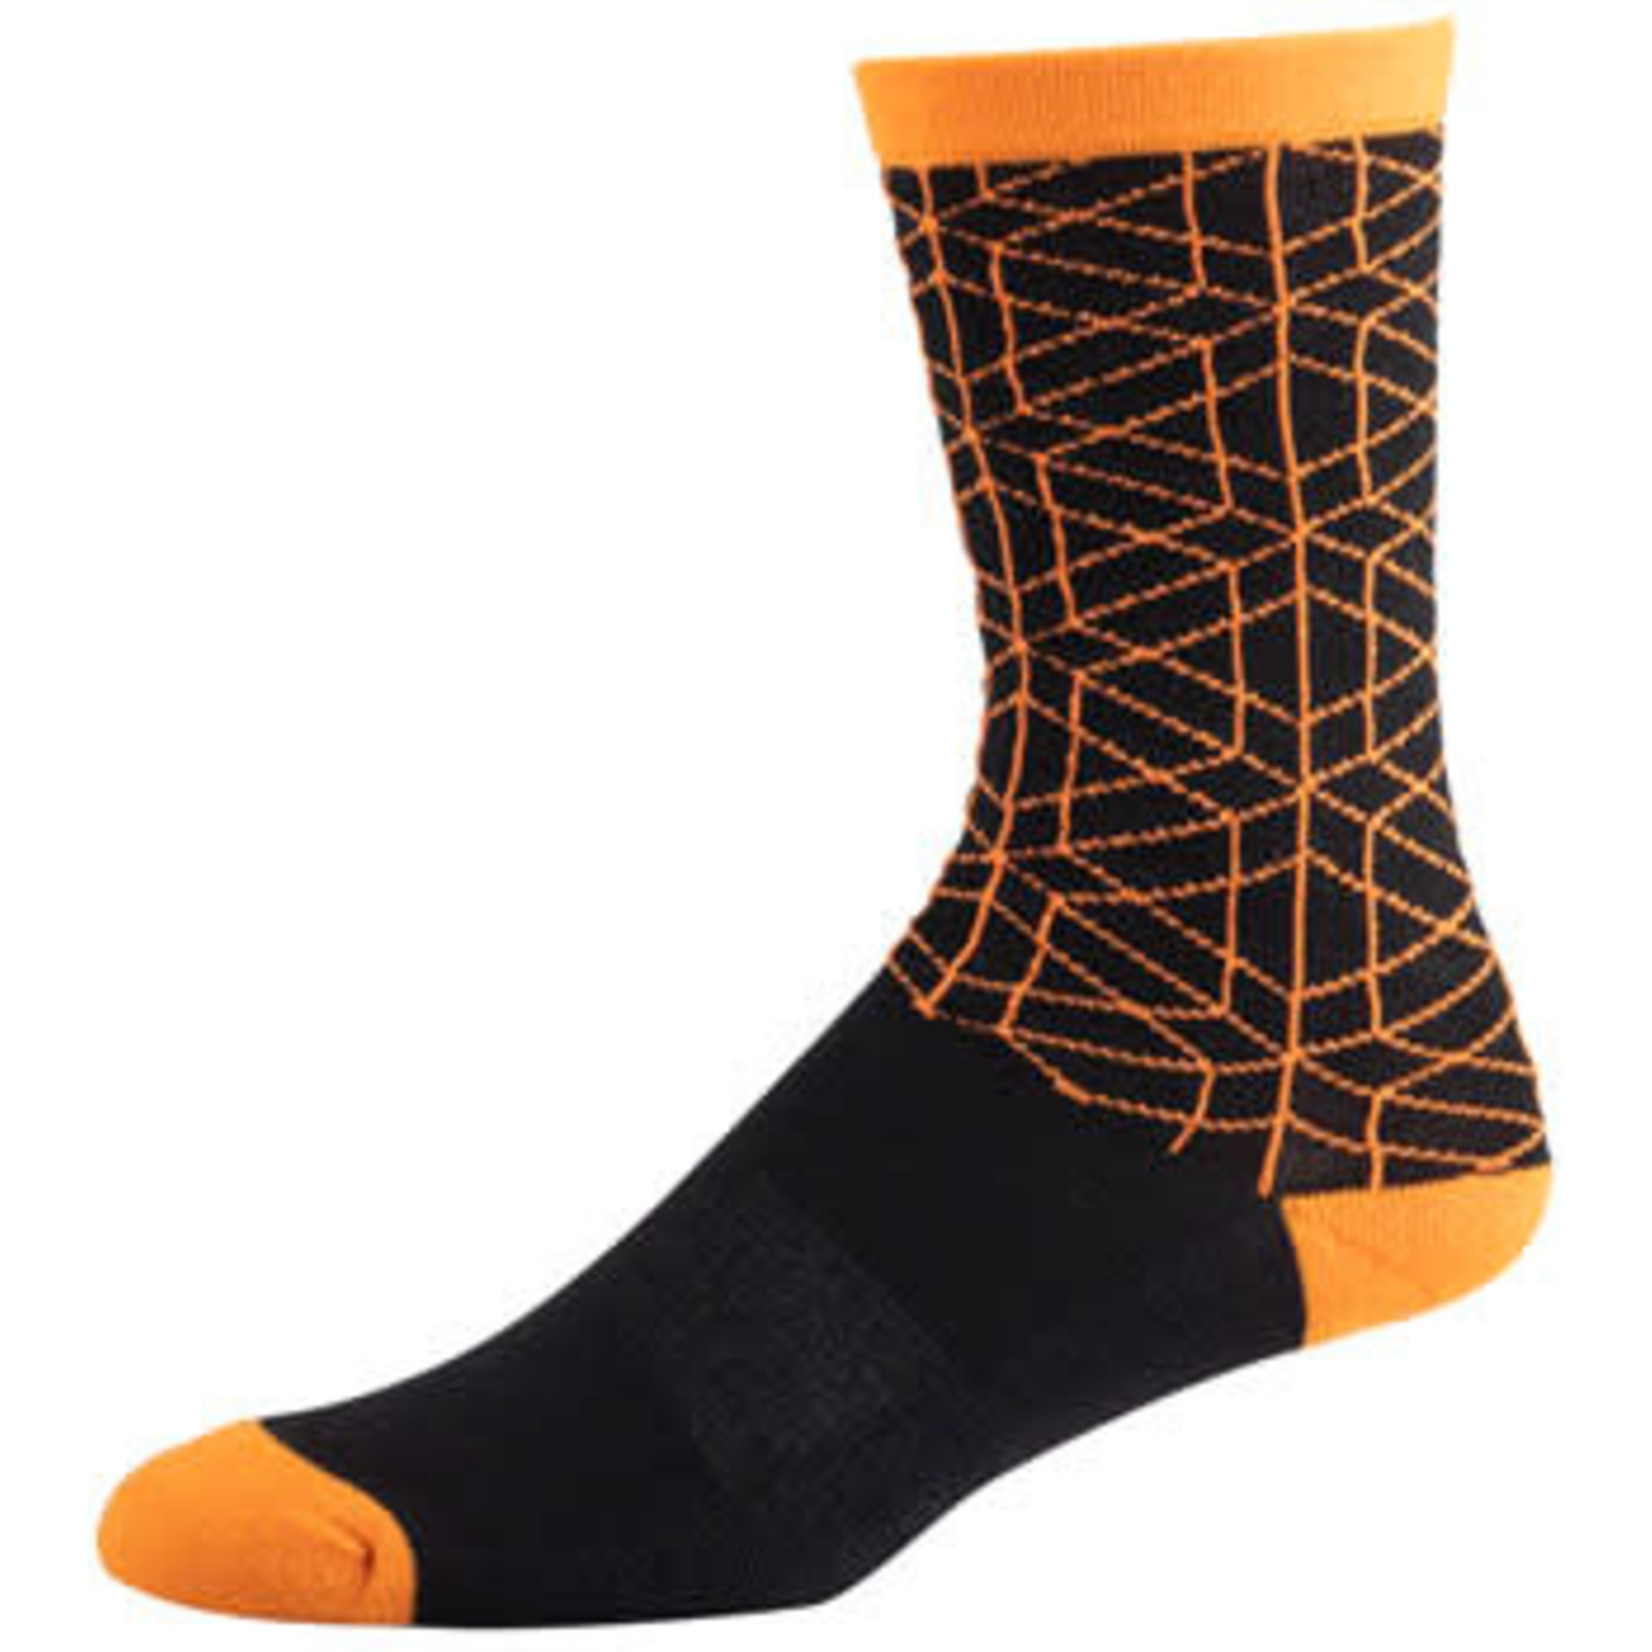 45NRTH 45NRTH Lumi Midweight Wool Sock - 7", Orange, Medium